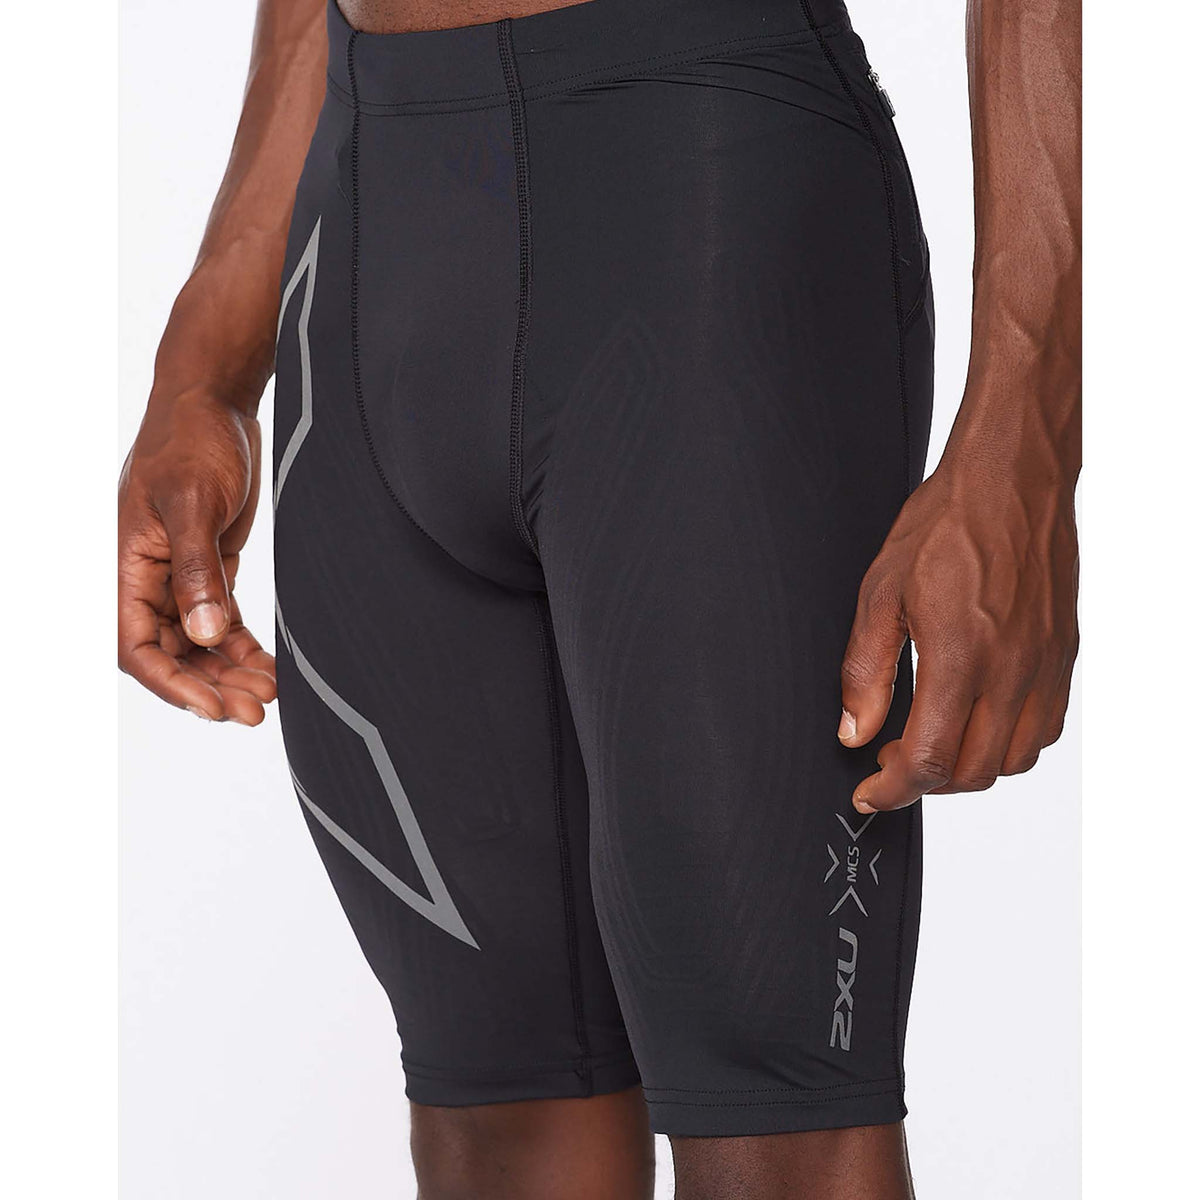 2XU Light Speed shorts de compression noir noir homme face